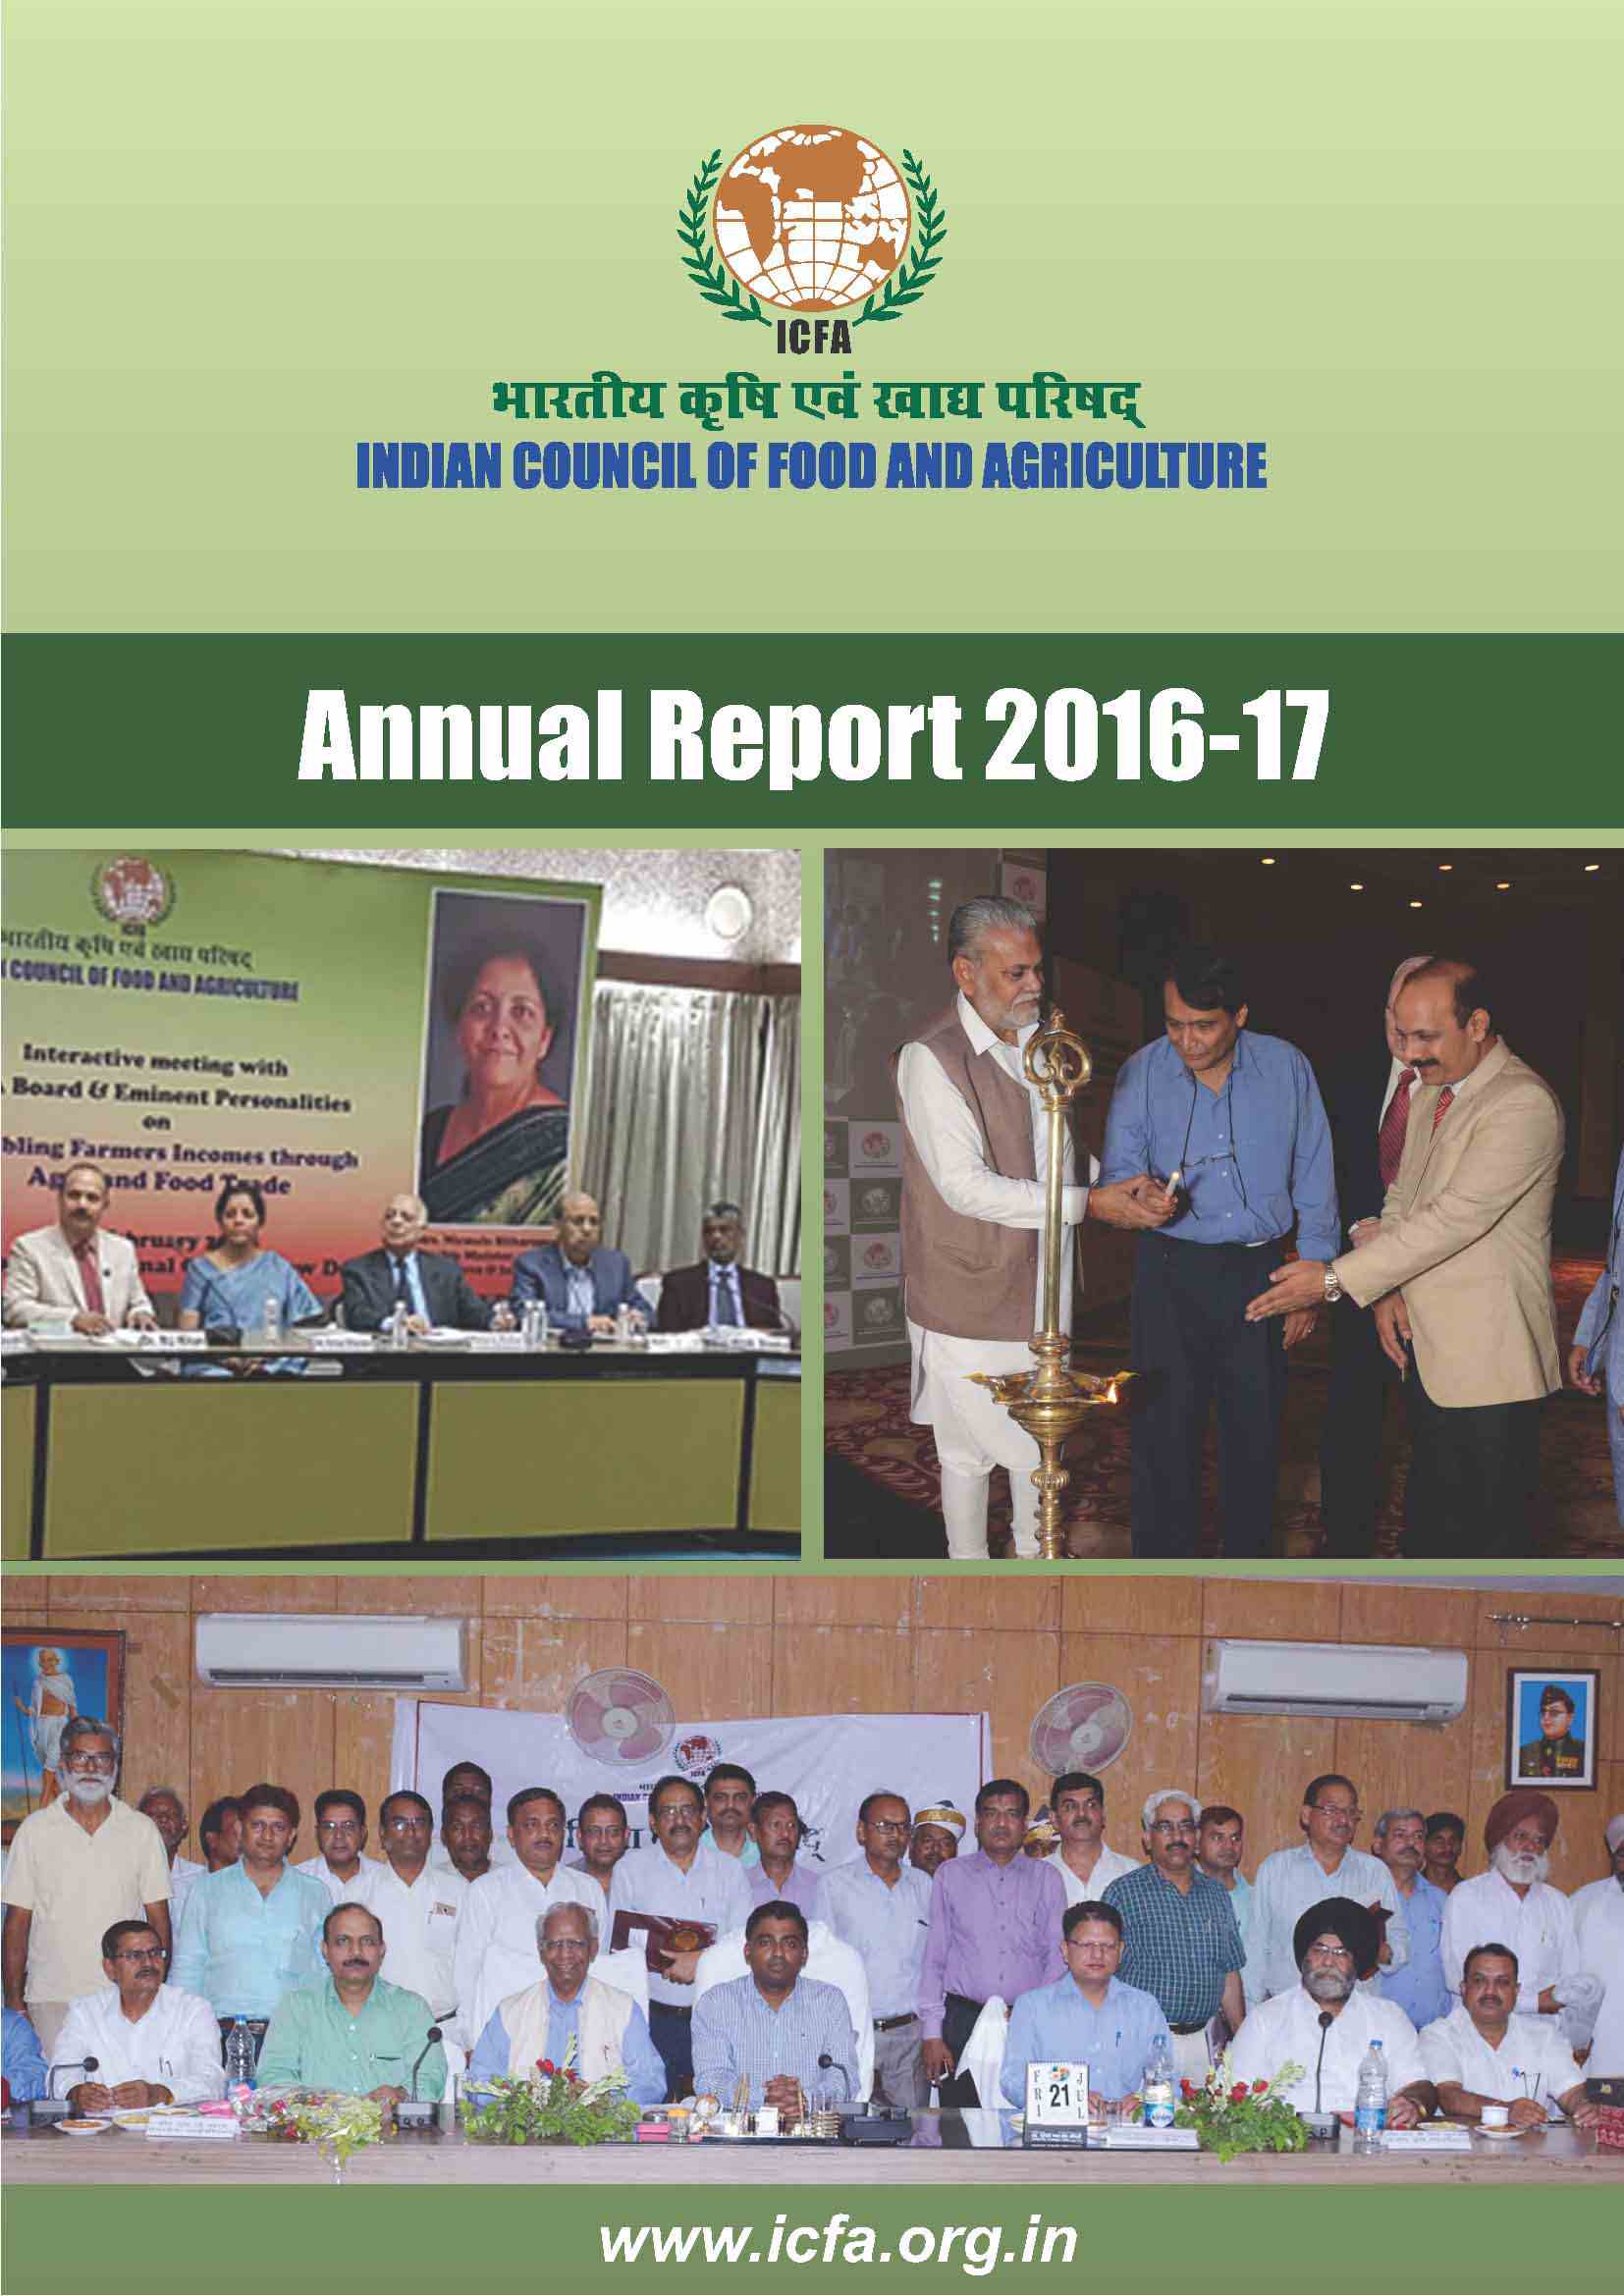 Annual Report 2016-2017